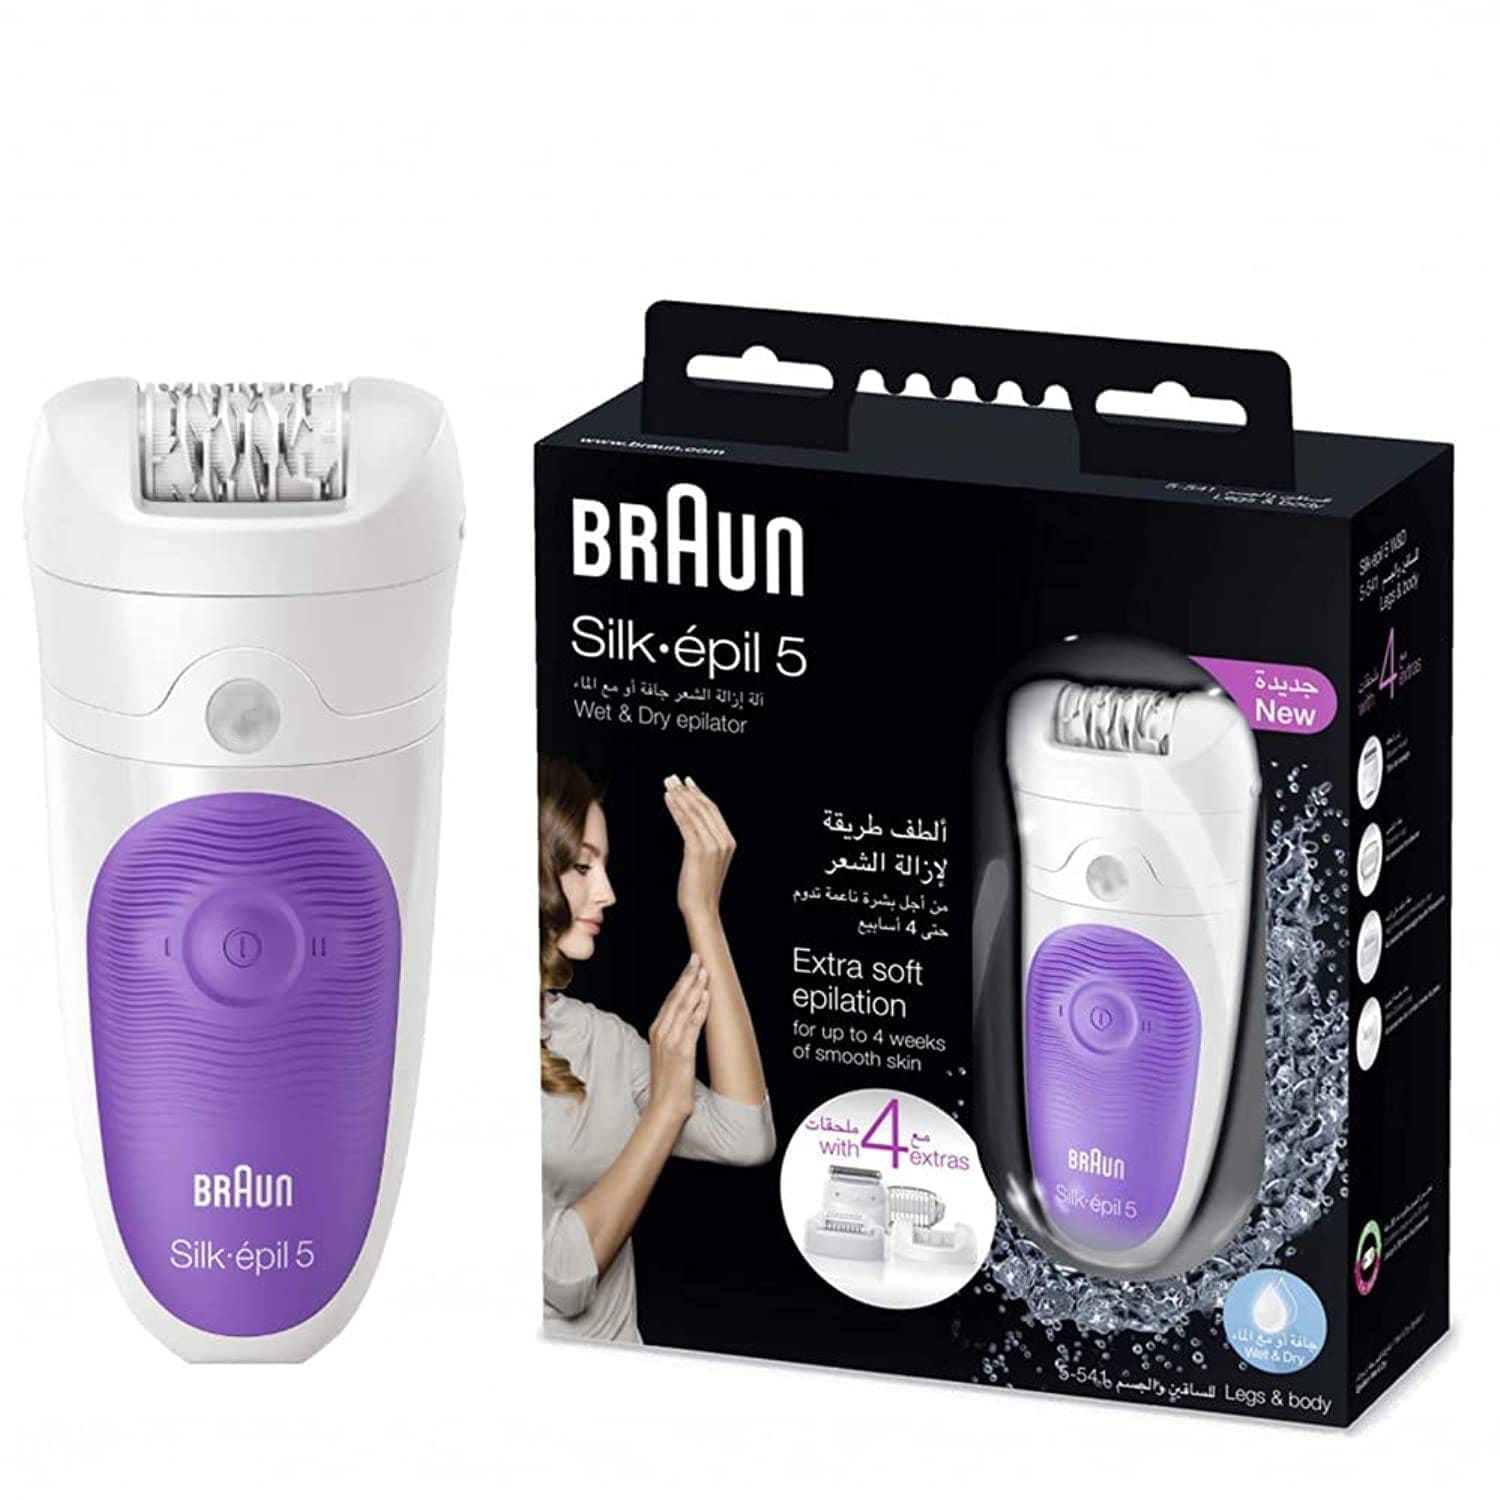 Shop BRAUN Braun Silk-Epil 5 Wet & Dry Epilator with 4 Extras, SE 5541